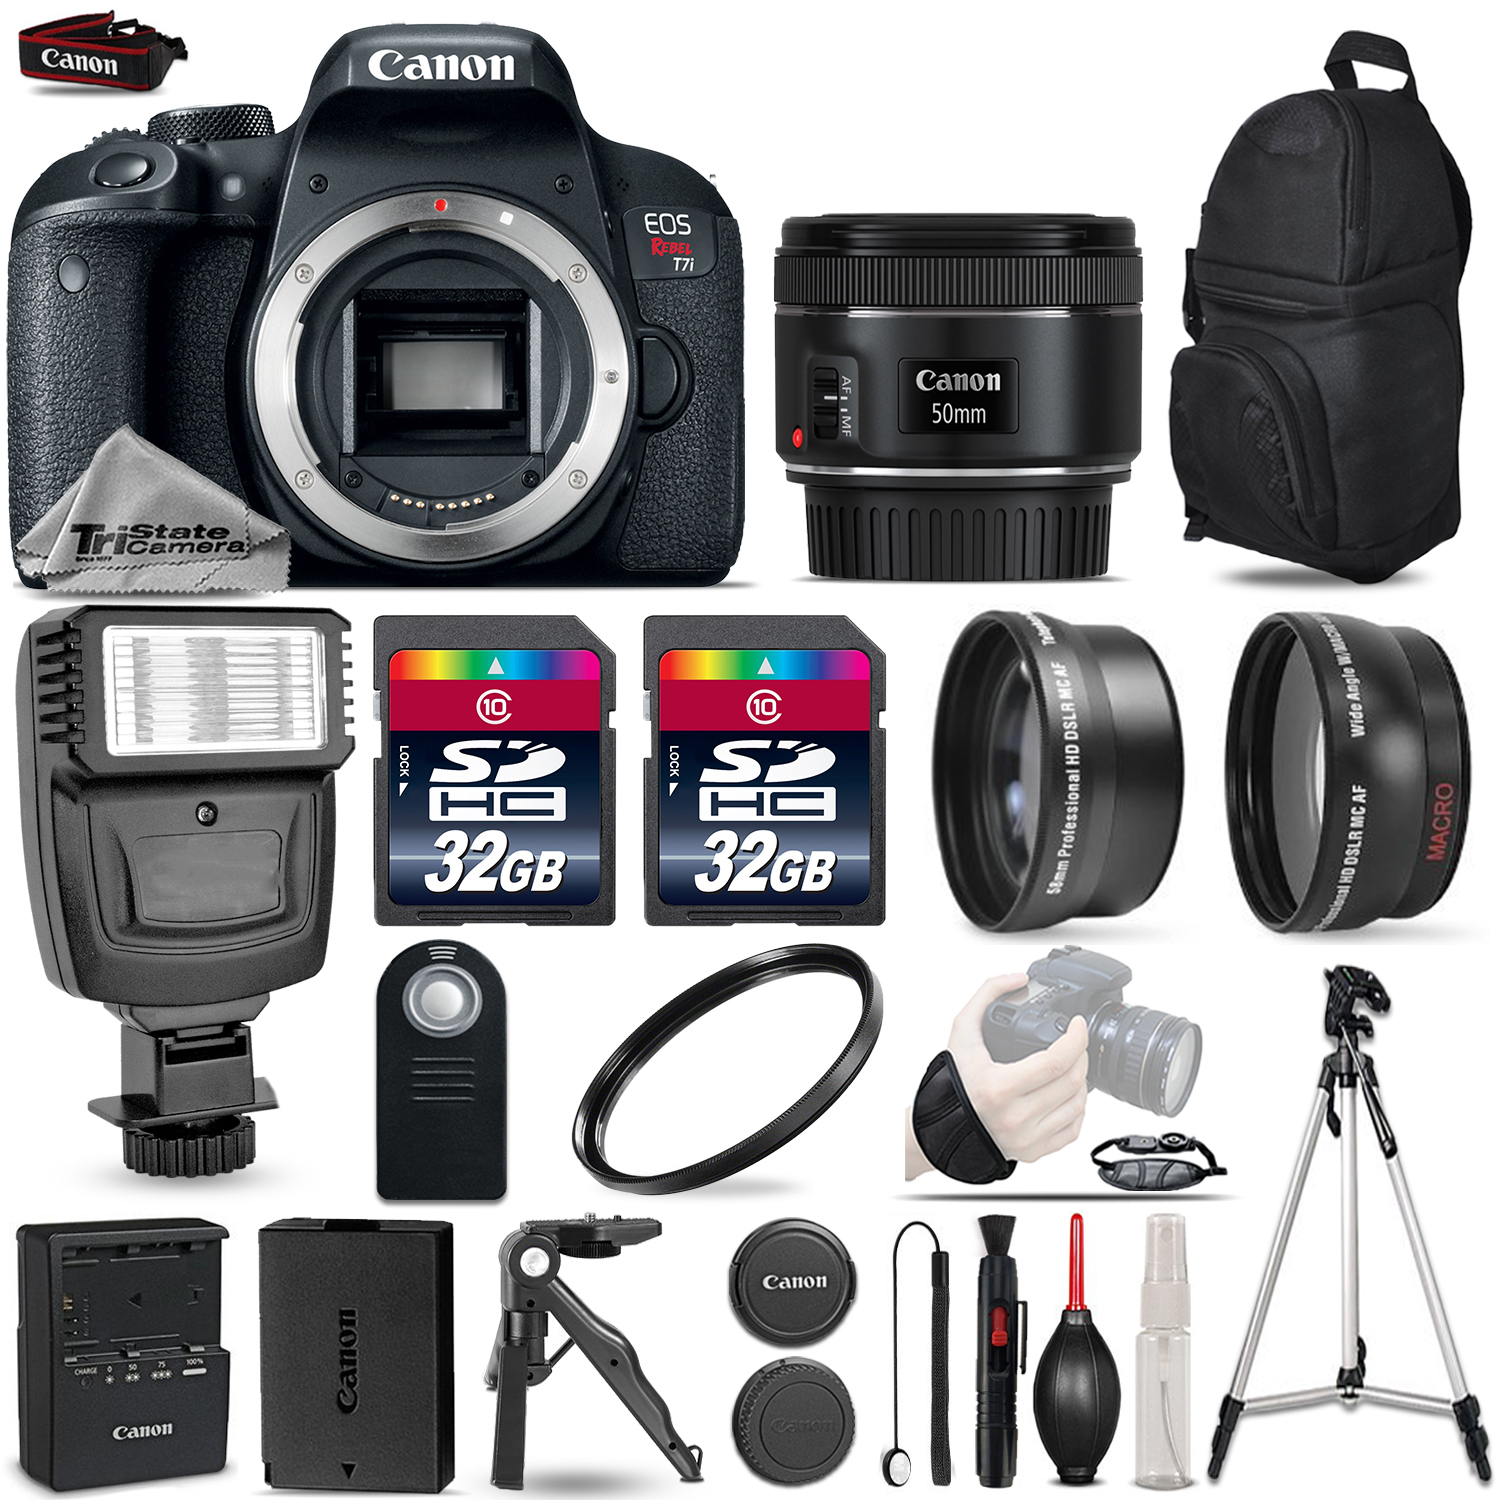 EOS Rebel T7i SLR Camera 800D + 50mm 1.8 -3 Lens Kit + Flash+ 64GB + More *FREE SHIPPING*